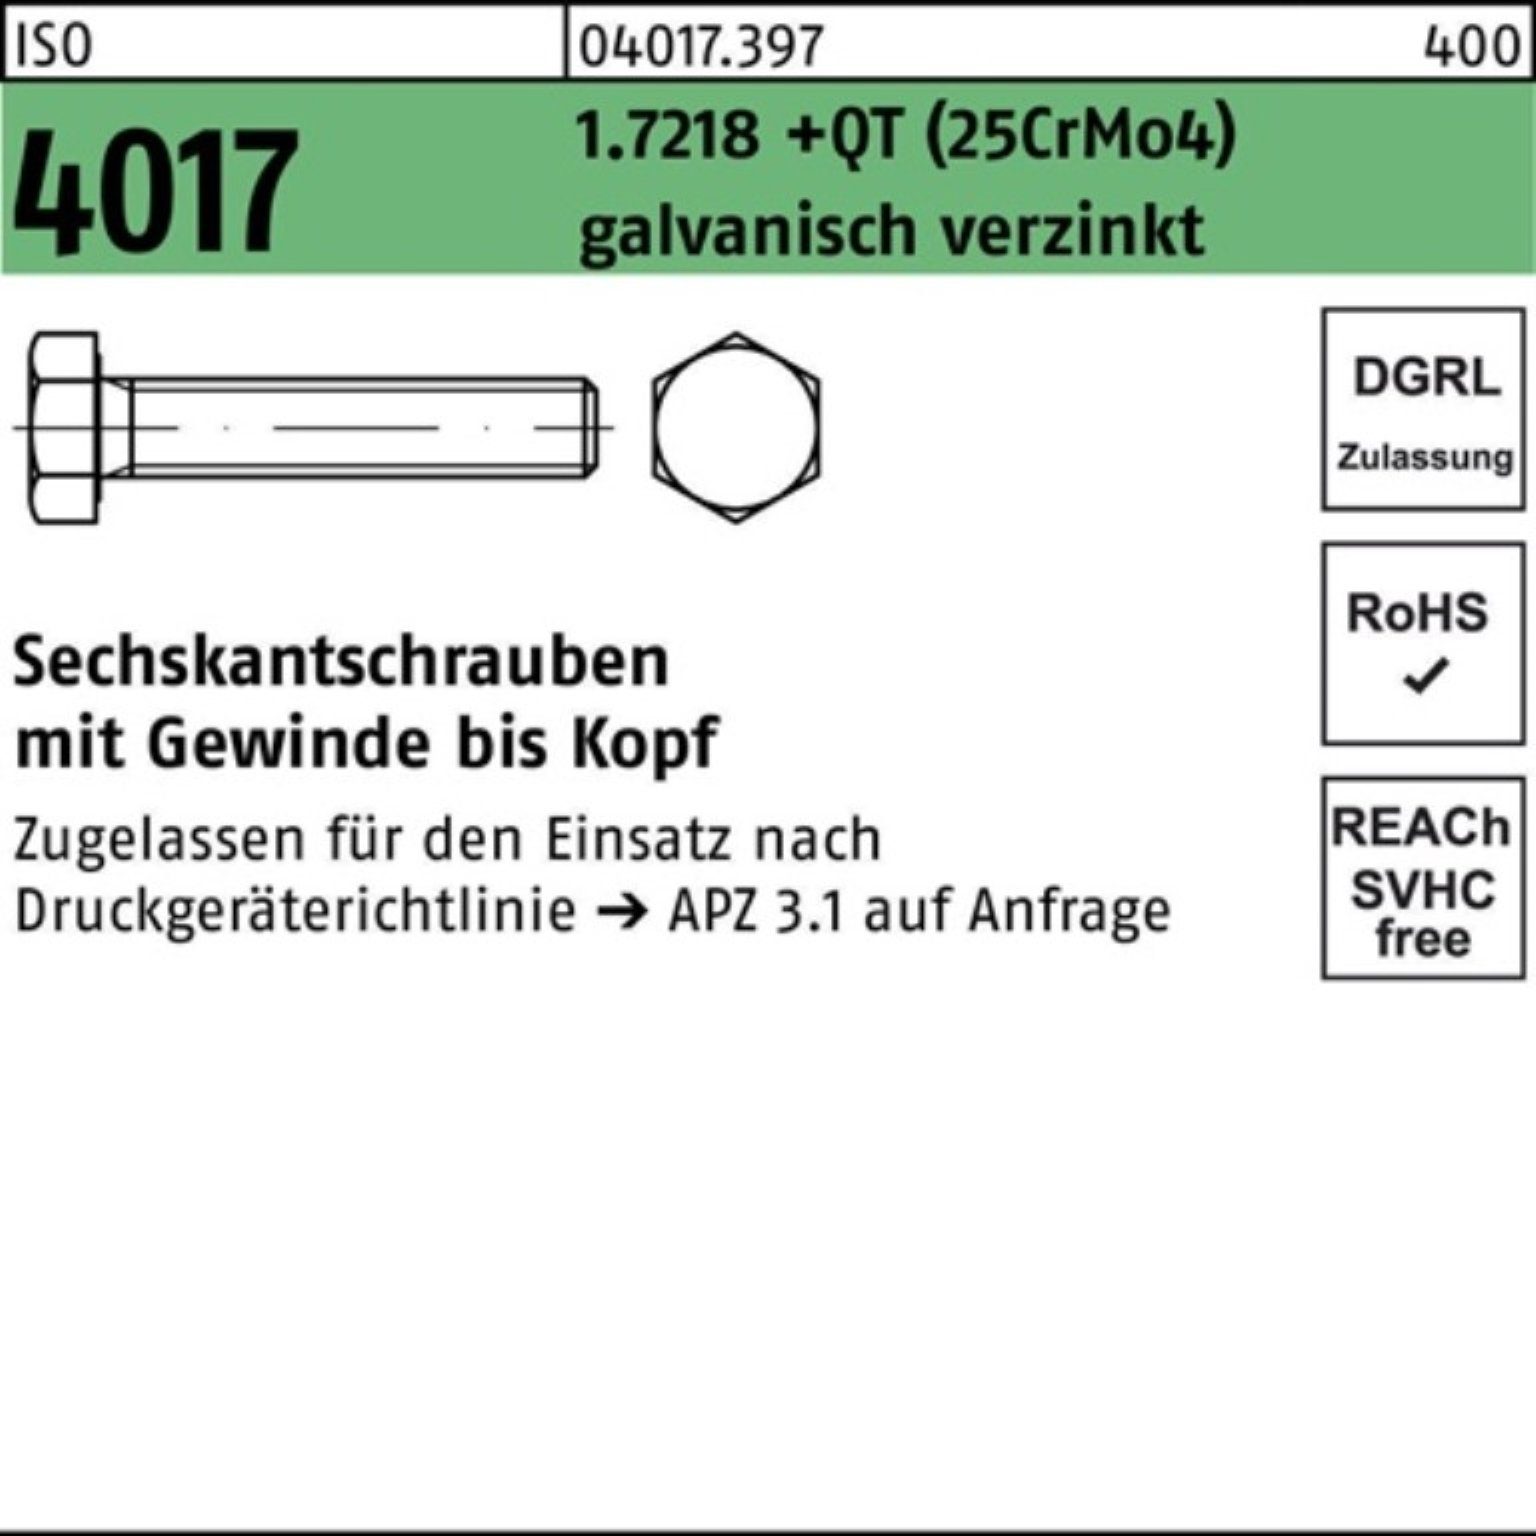 Bufab Sechskantschraube 100er Pack 4017 Sechskantschraube VG +QT ISO g (25CrMo4) 1.7218 M20x55